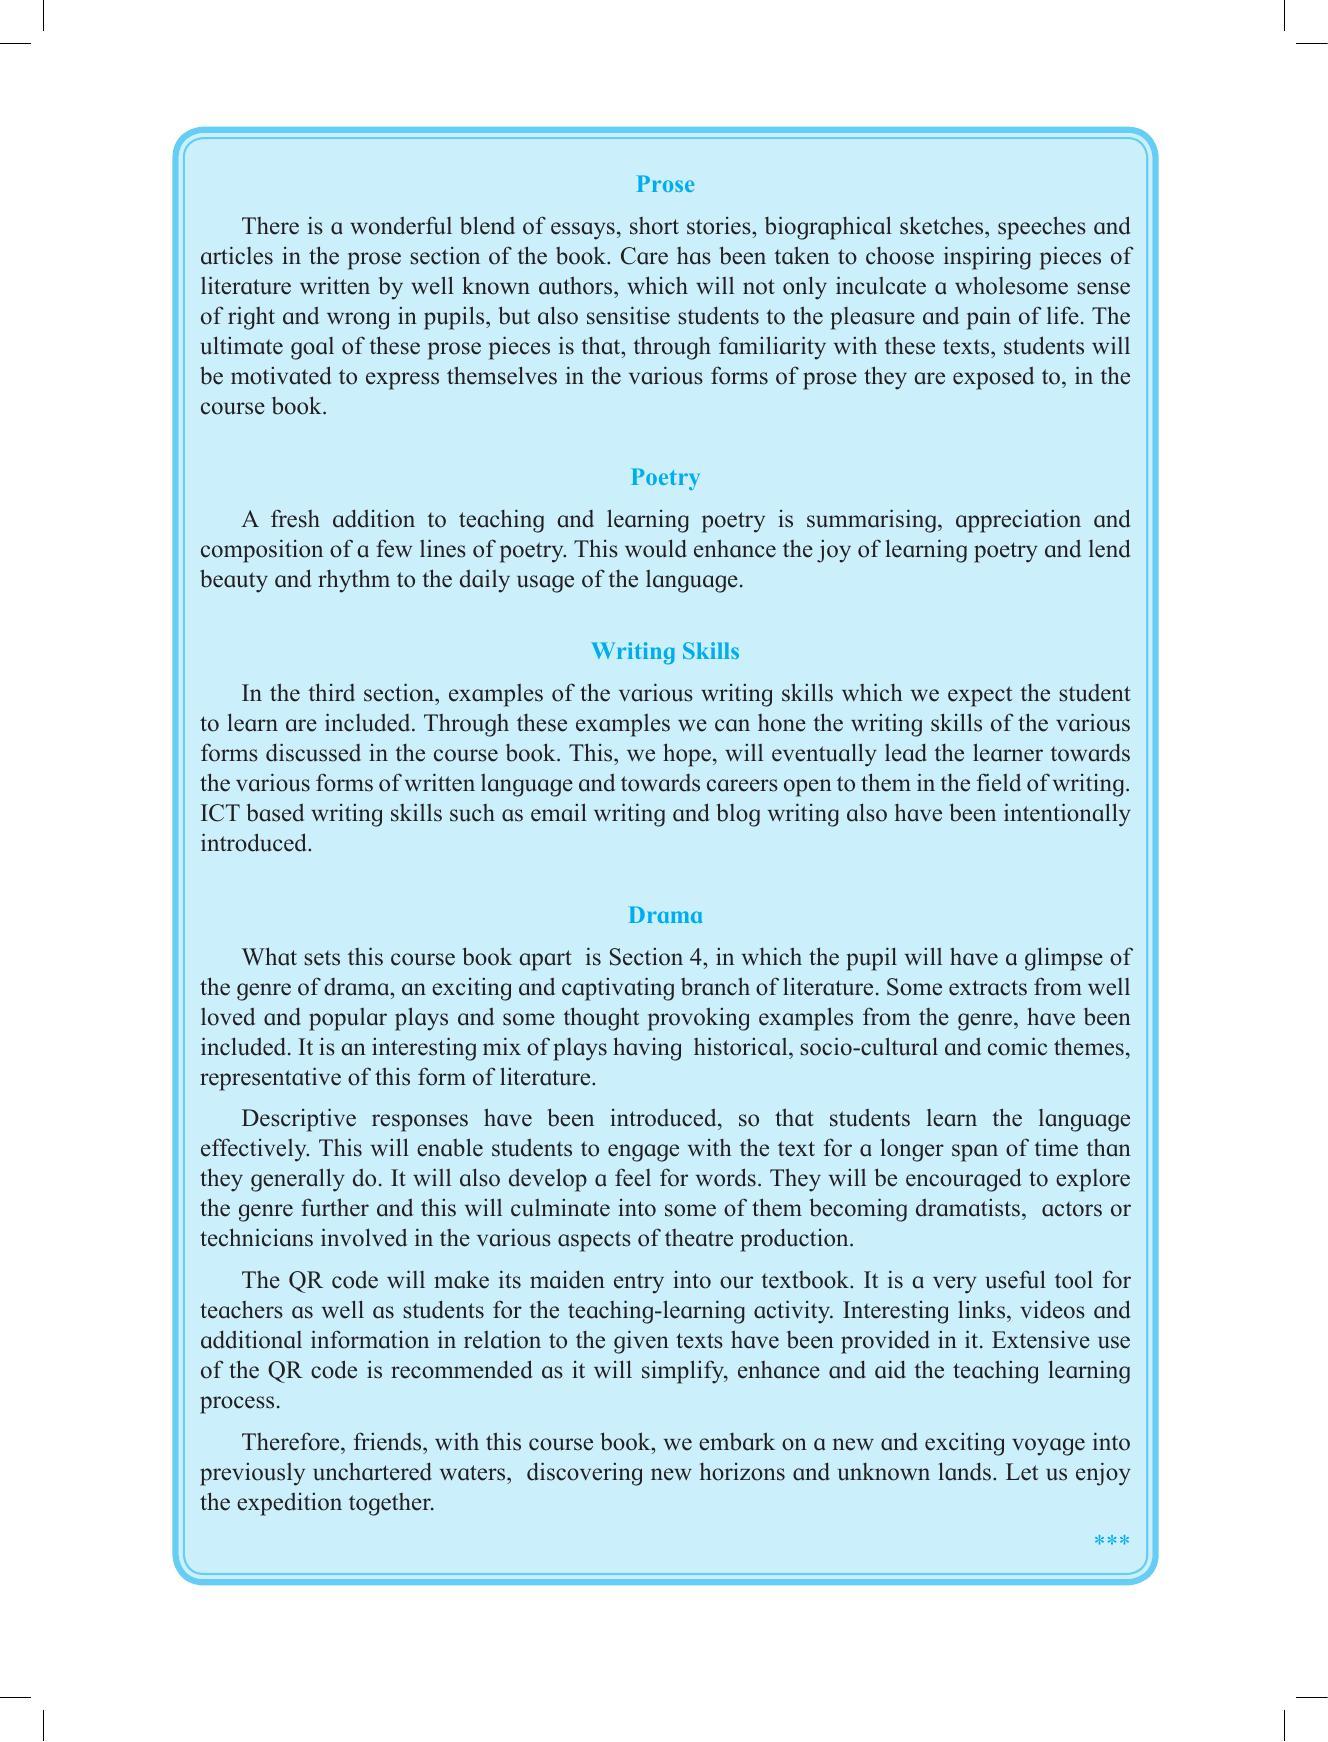 Maharashtra Board Class 11 English Textbook - Page 9